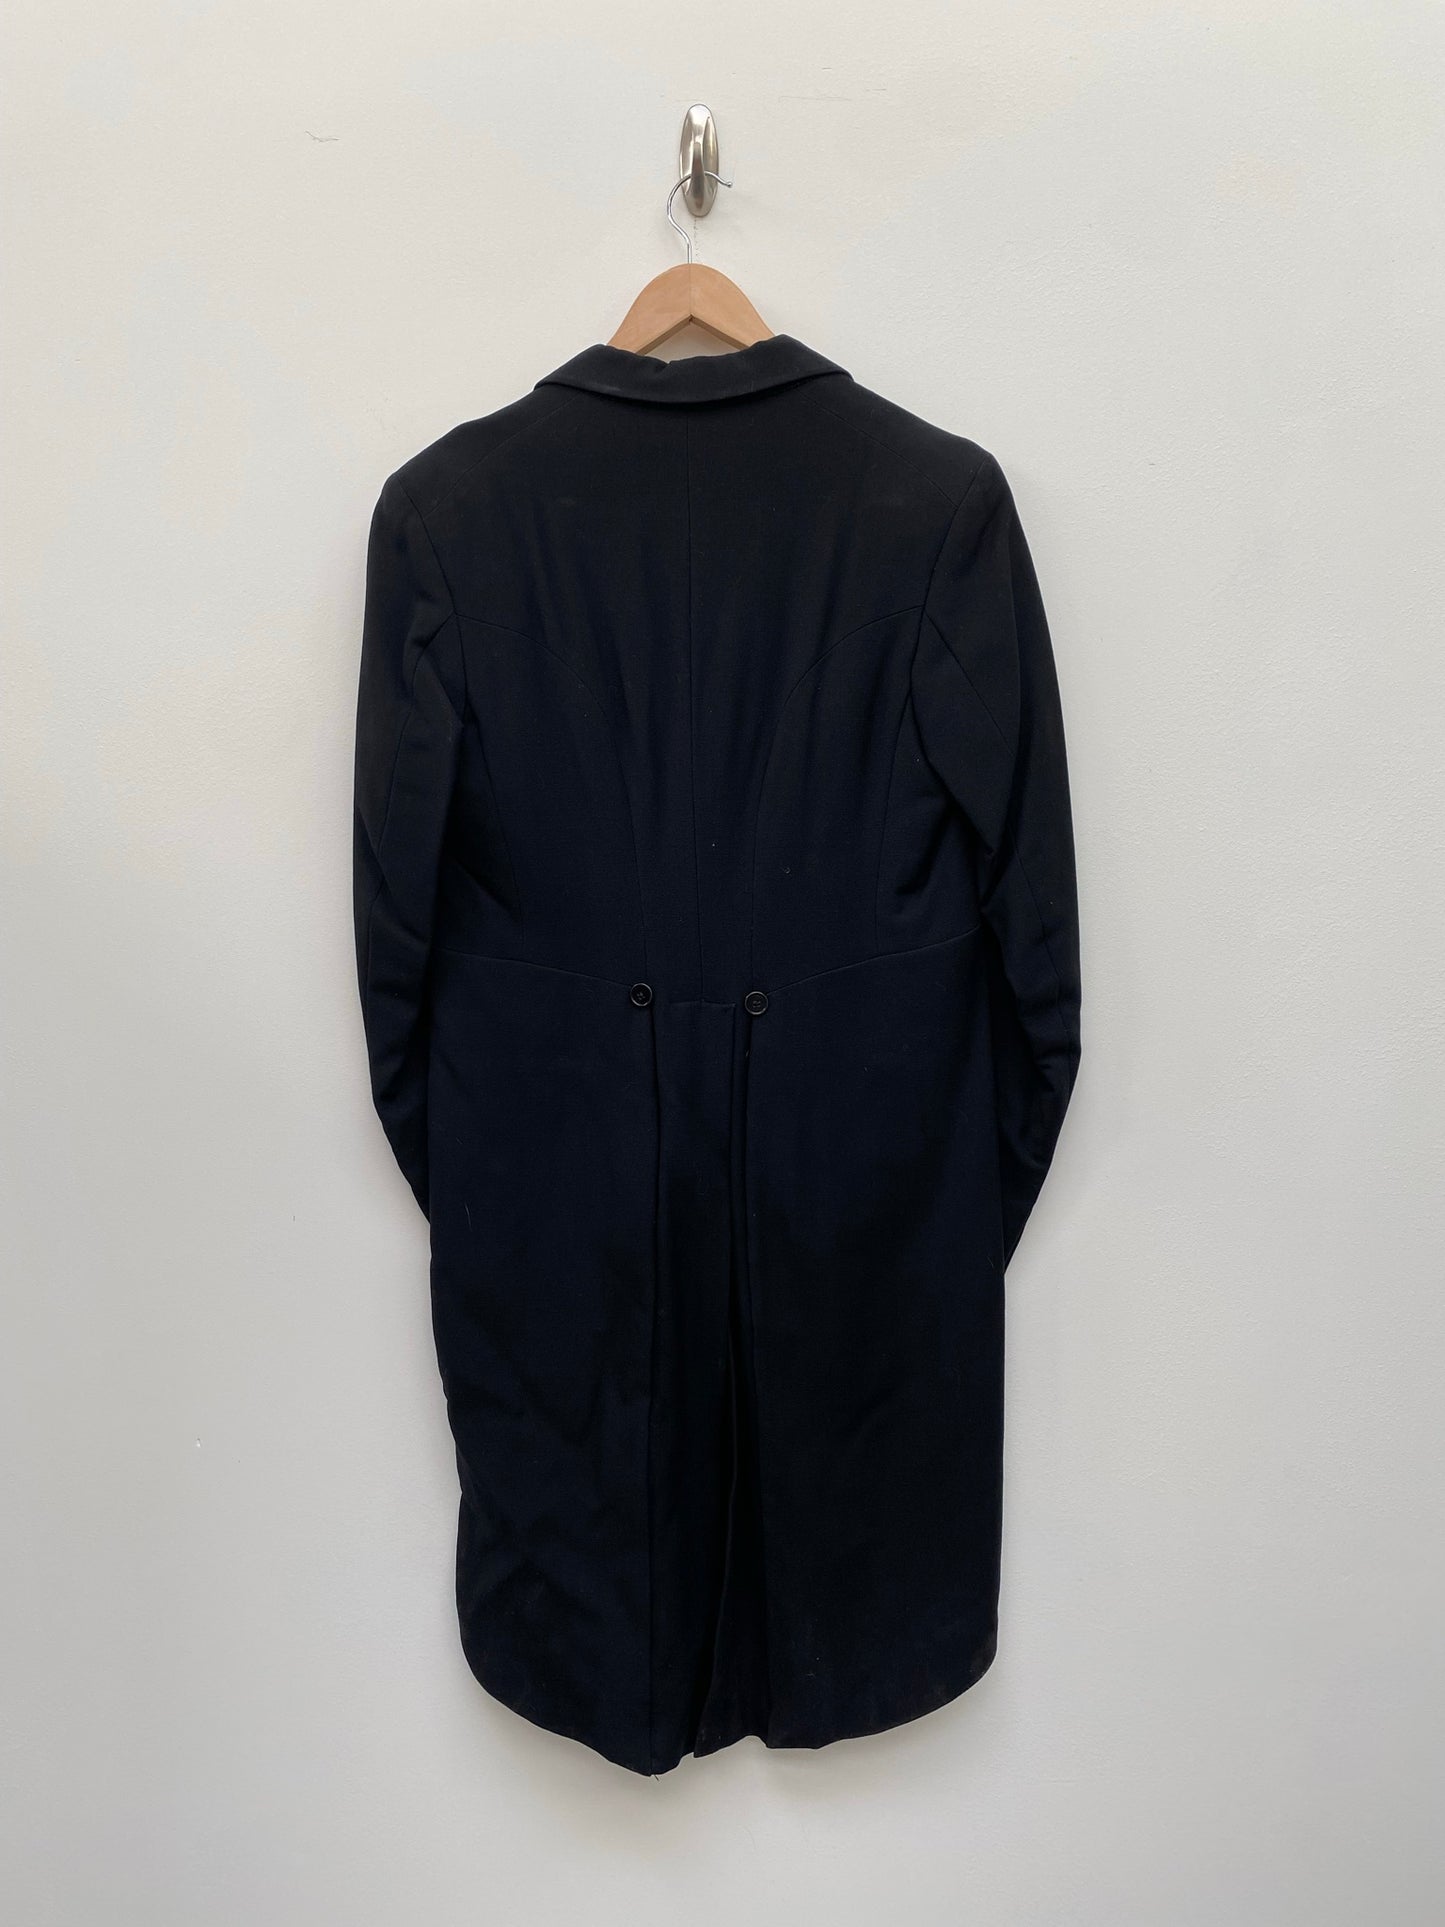 Black Morning Suit Jacket Size Small/Medium - Vintage Clothing/Ex Hire Fancy Dress Costume